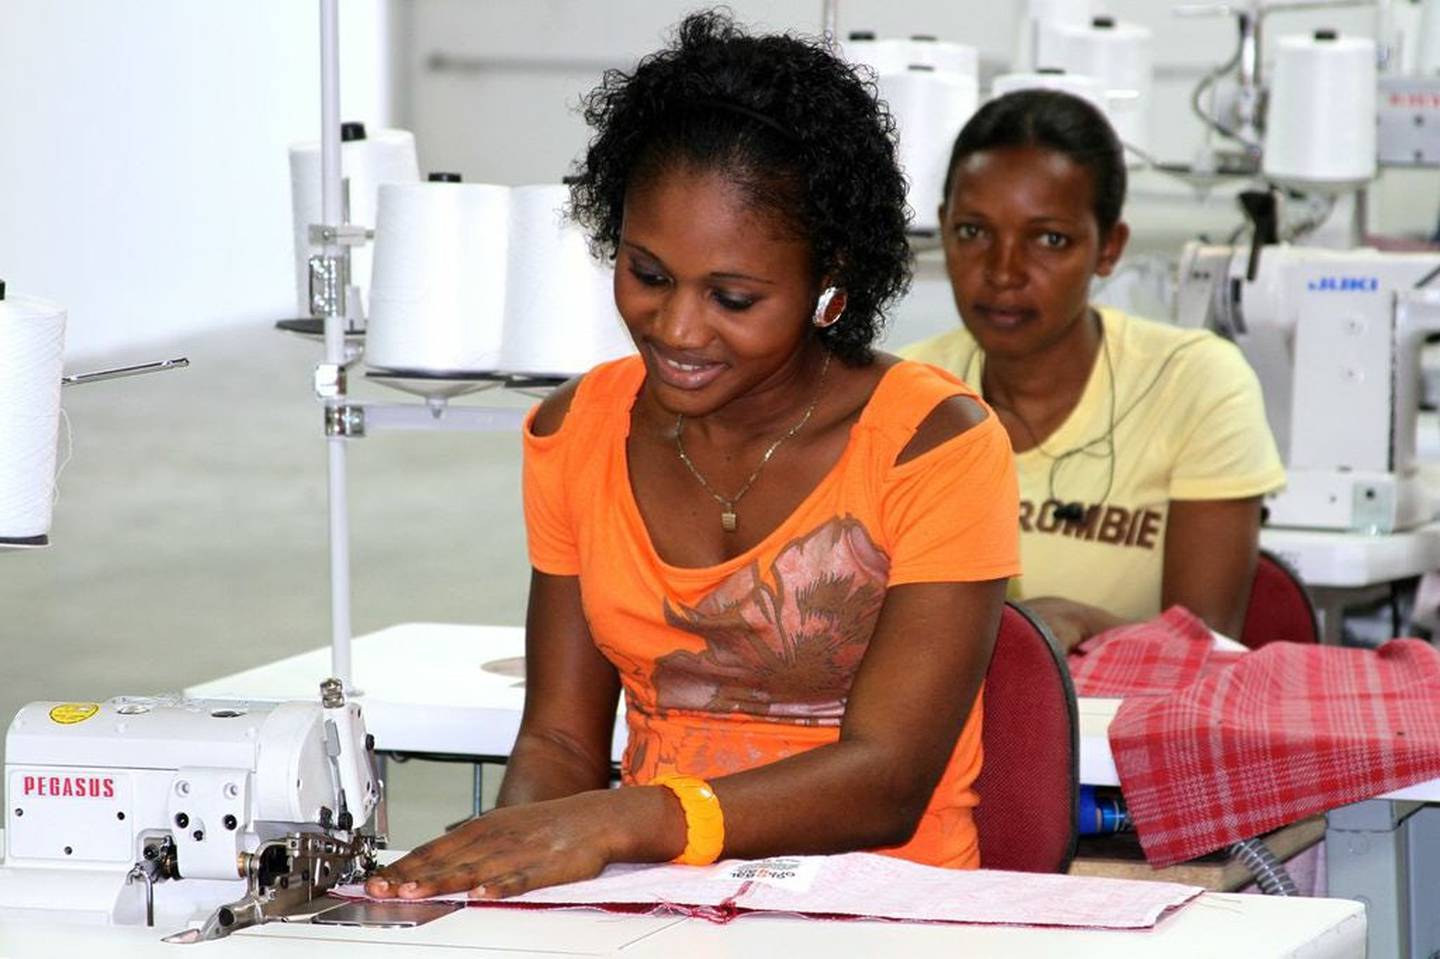 Inside Industrial Revolution II's garment factory in Haiti | Source: Industrial Revolution II